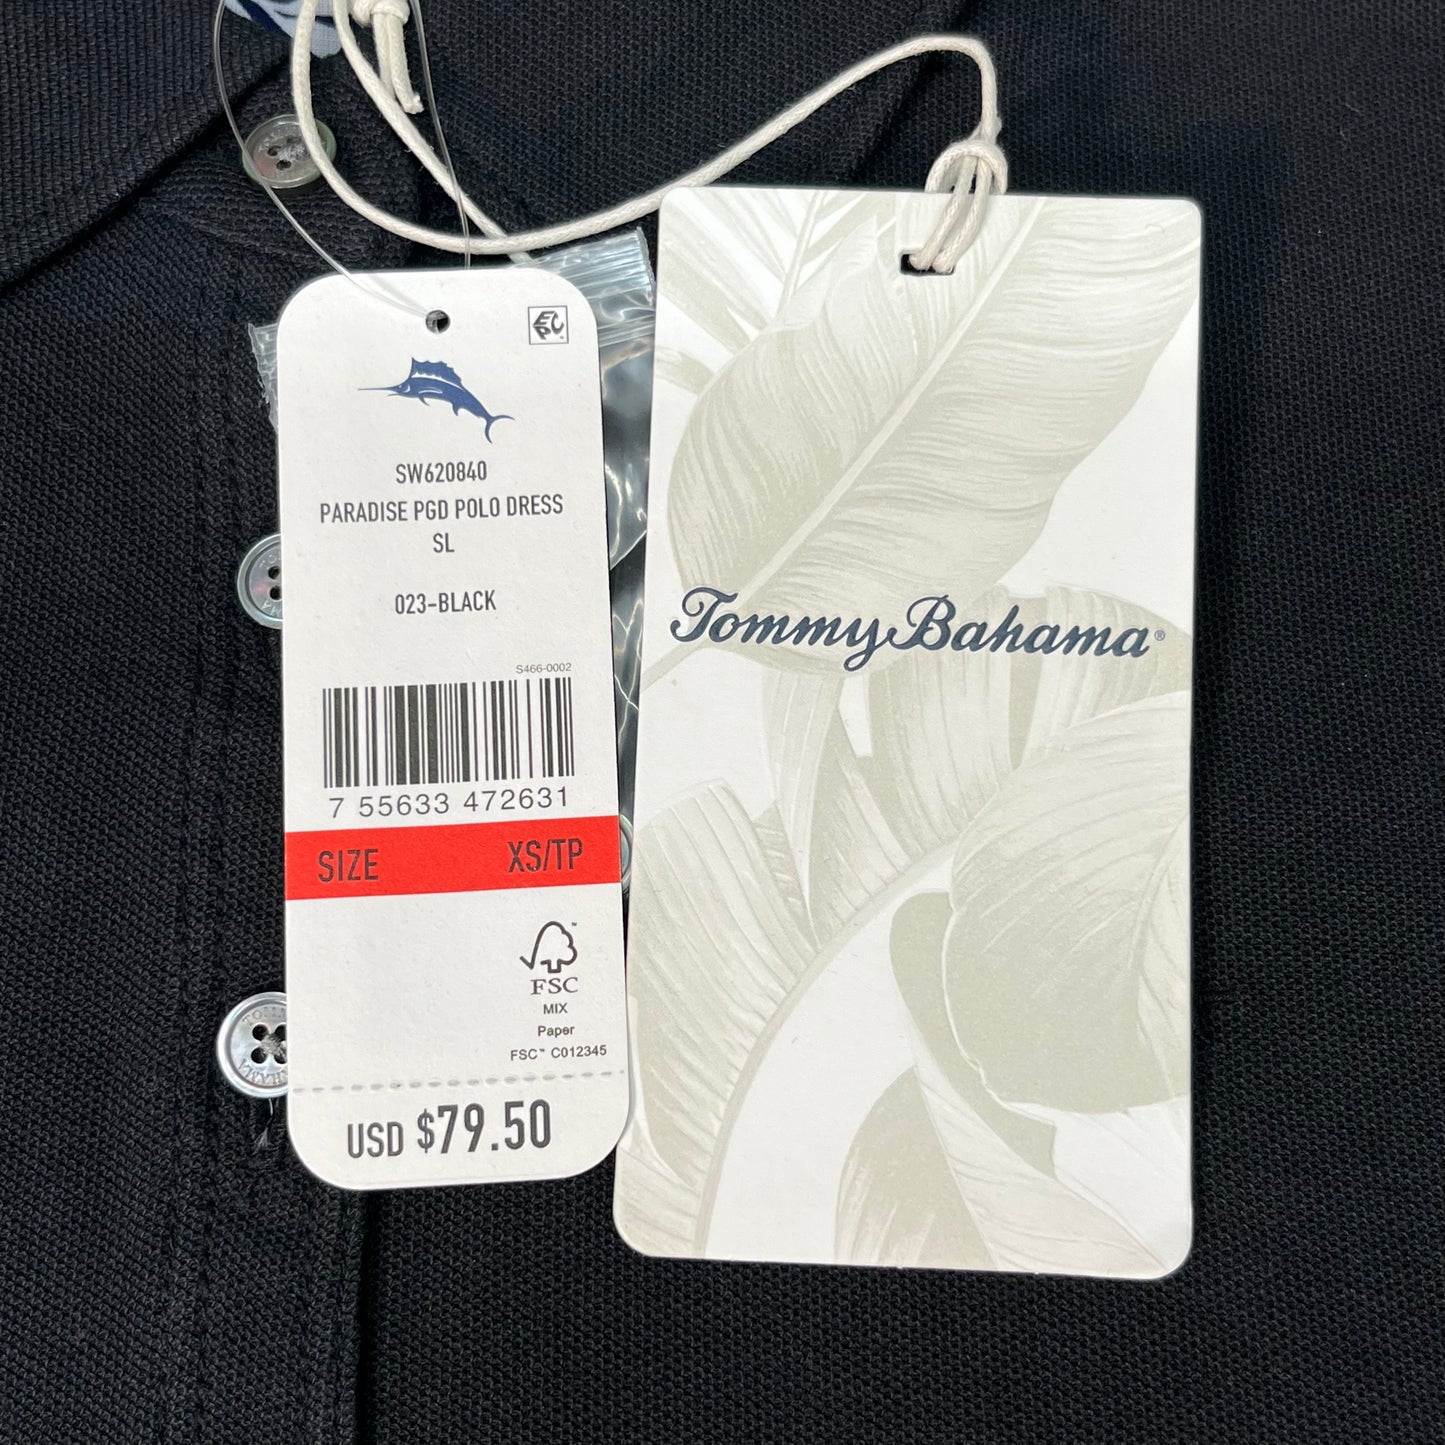 TOMMY BAHAMA Paradise Sleeveless Garment Polo Dress Sz XS Black SW620840 (New)